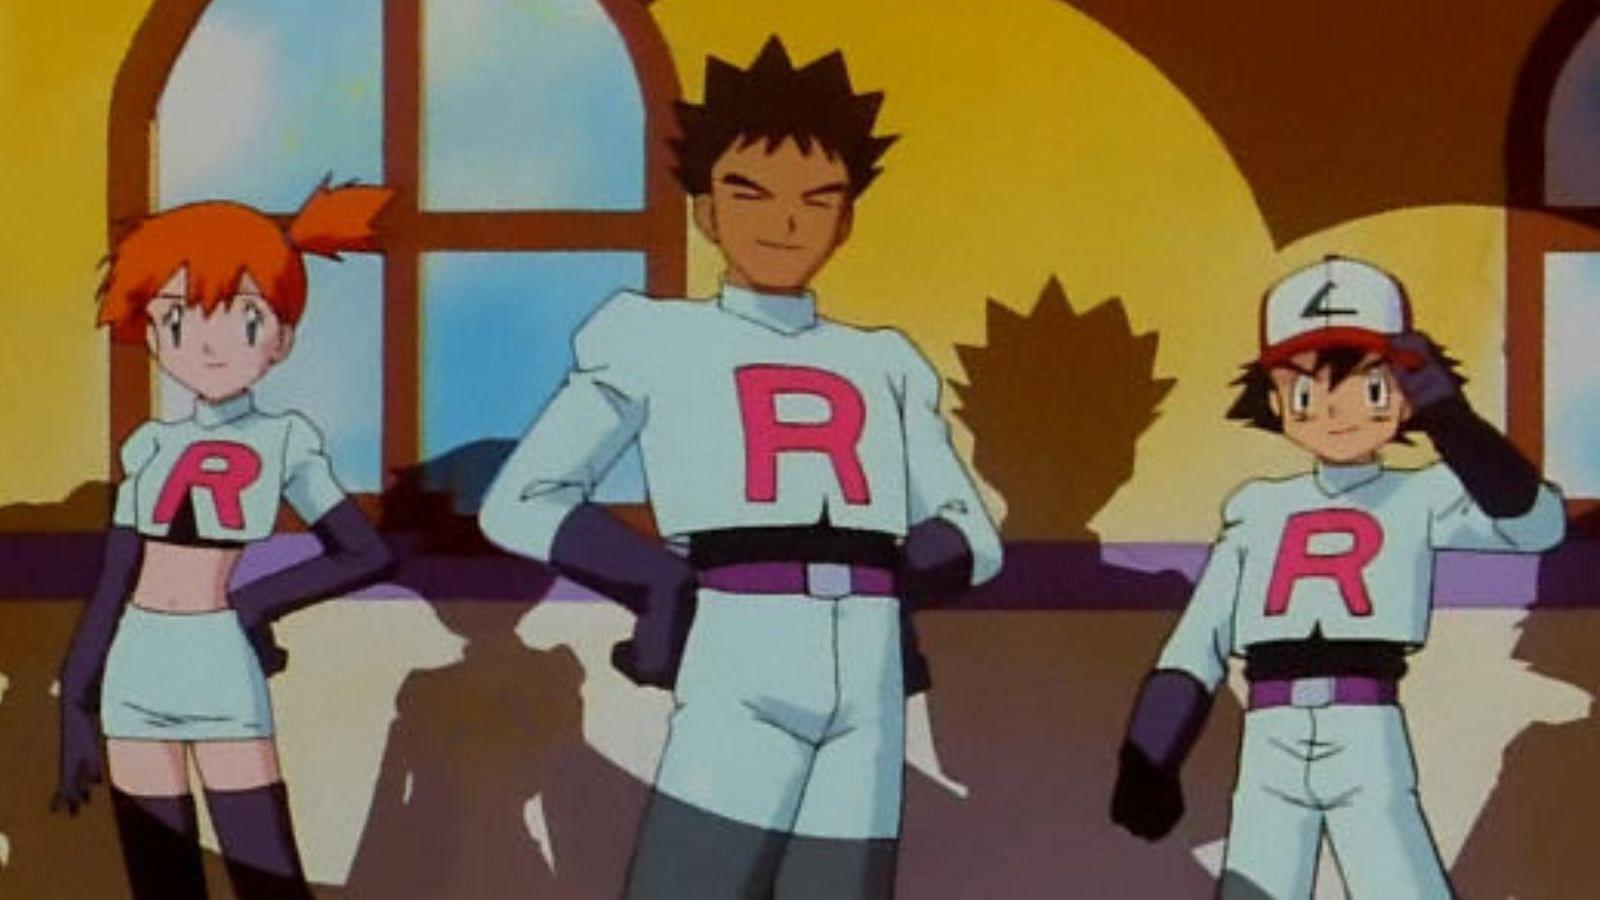 Pokemon anime protagonists with Team Rocket uniforms.